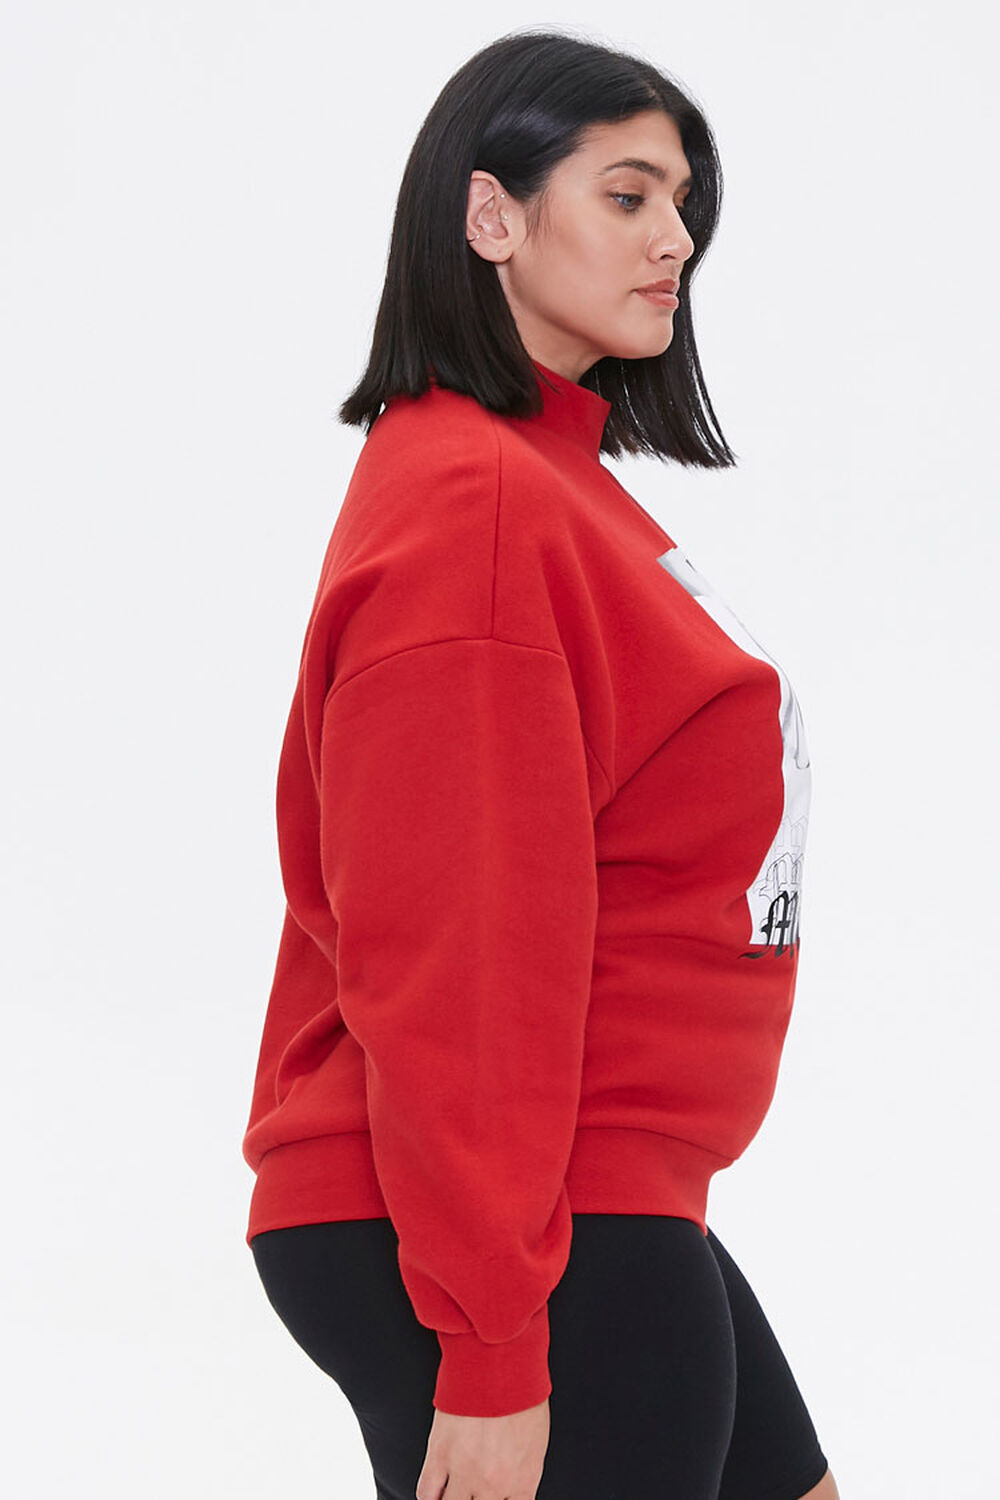 RED/MULTI Plus Size Marilyn Monroe Sweatshirt, image 2